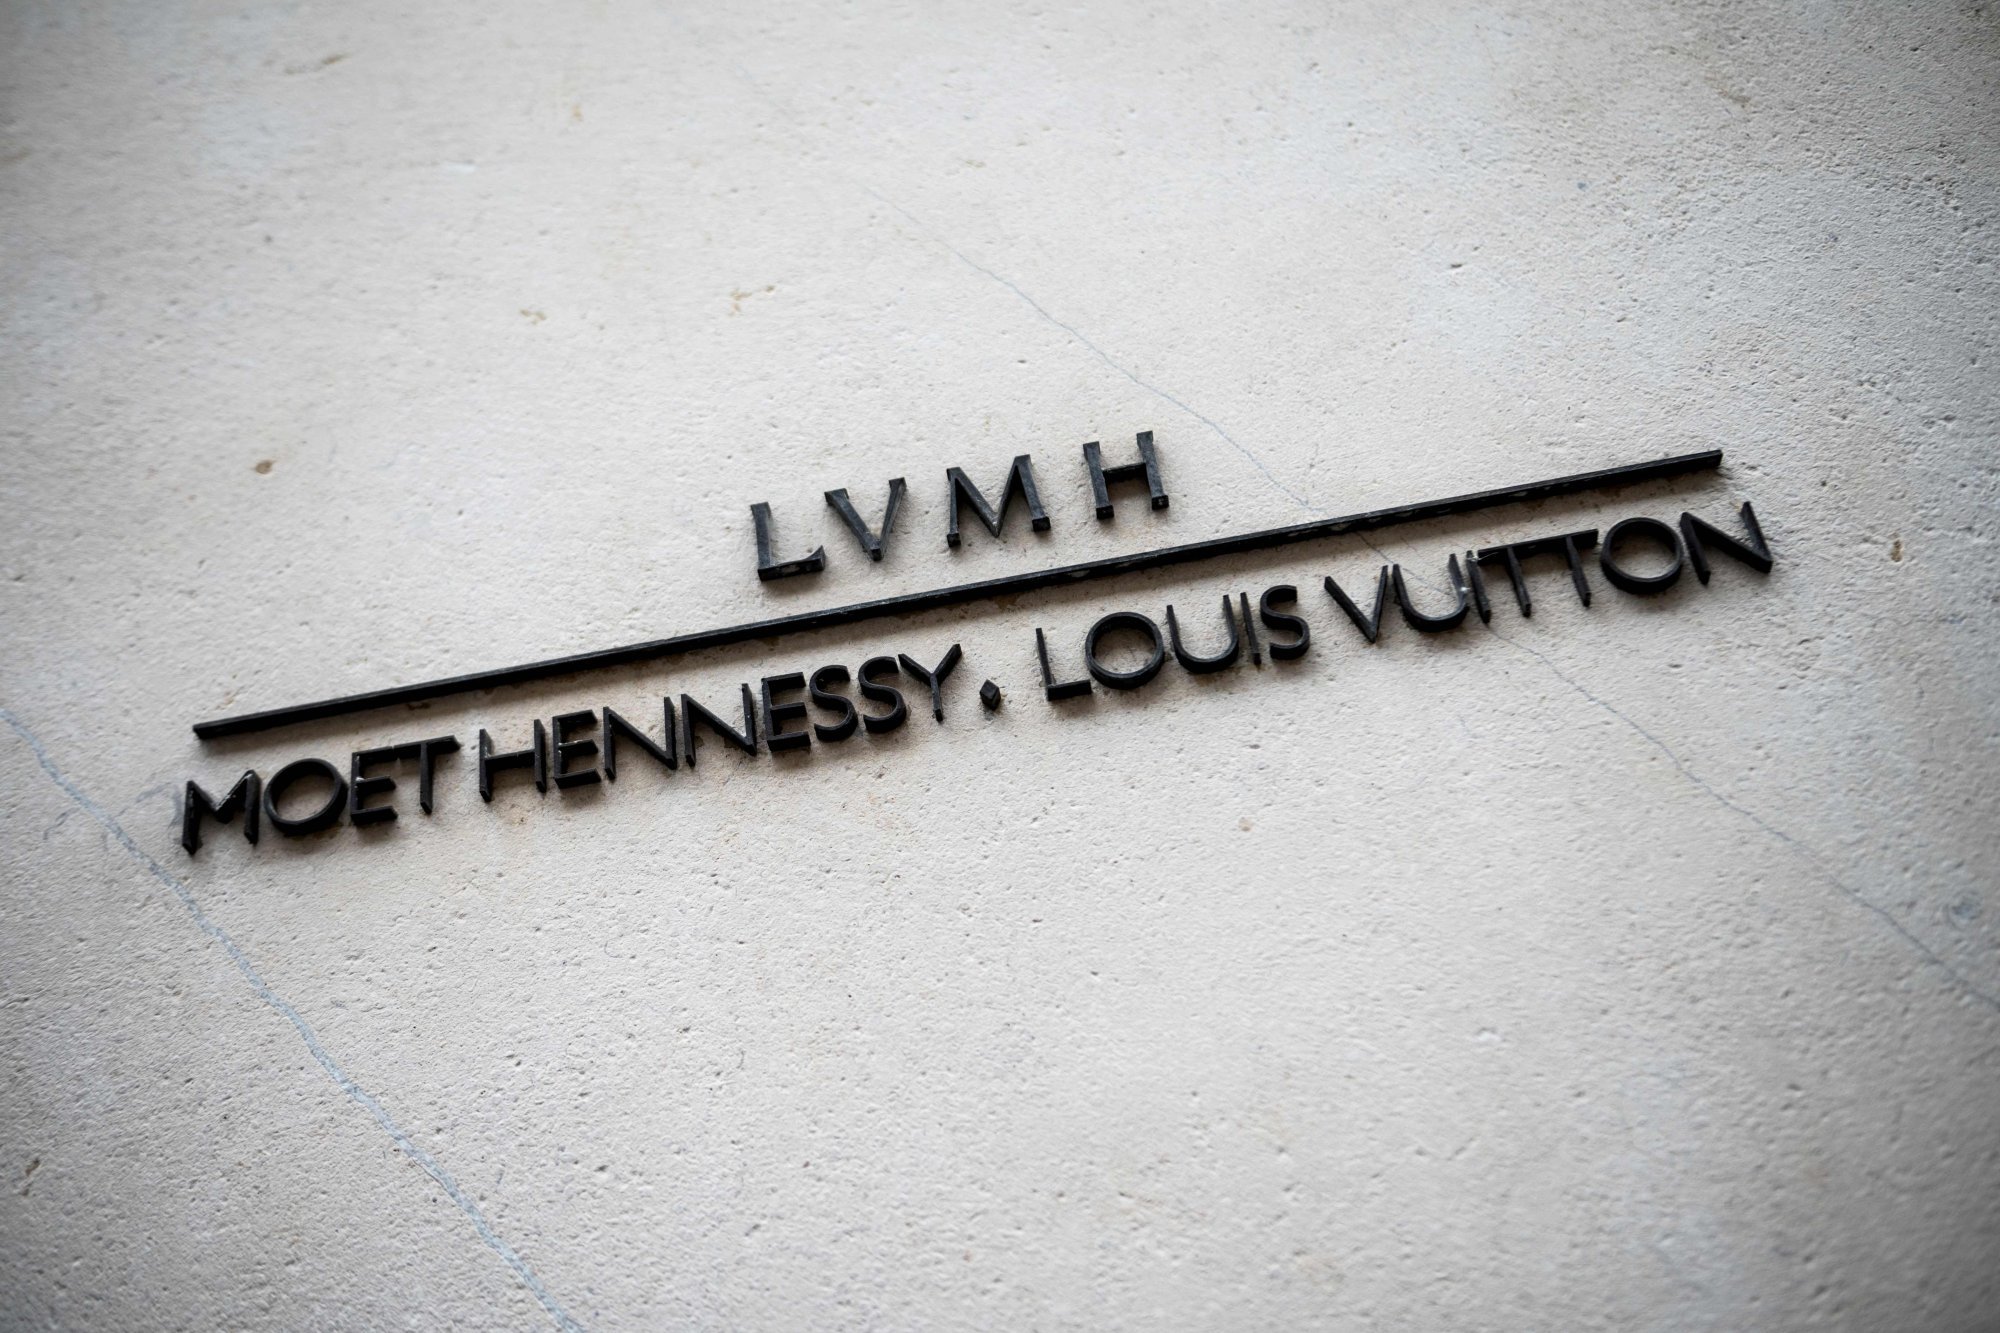 Will Bernard Arnault's son Antoine succeed his dad at LVMH? The